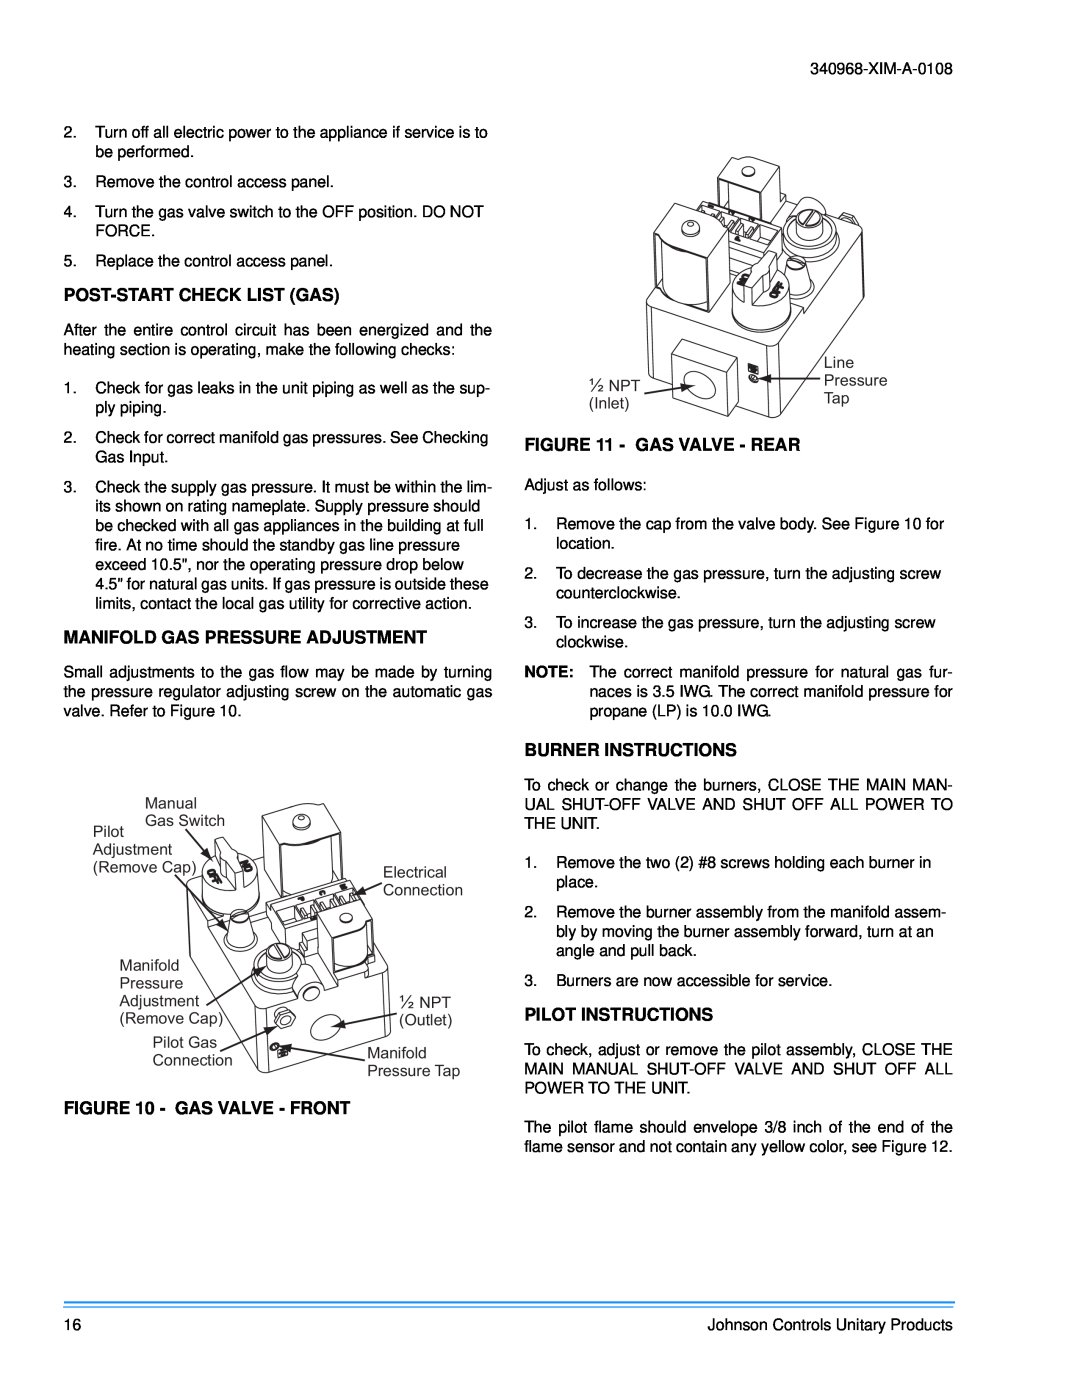 Johnson Controls 340968-XIM-A-0108 Post-Startcheck List Gas, Manifold Gas Pressure Adjustment, Gas Valve - Rear 